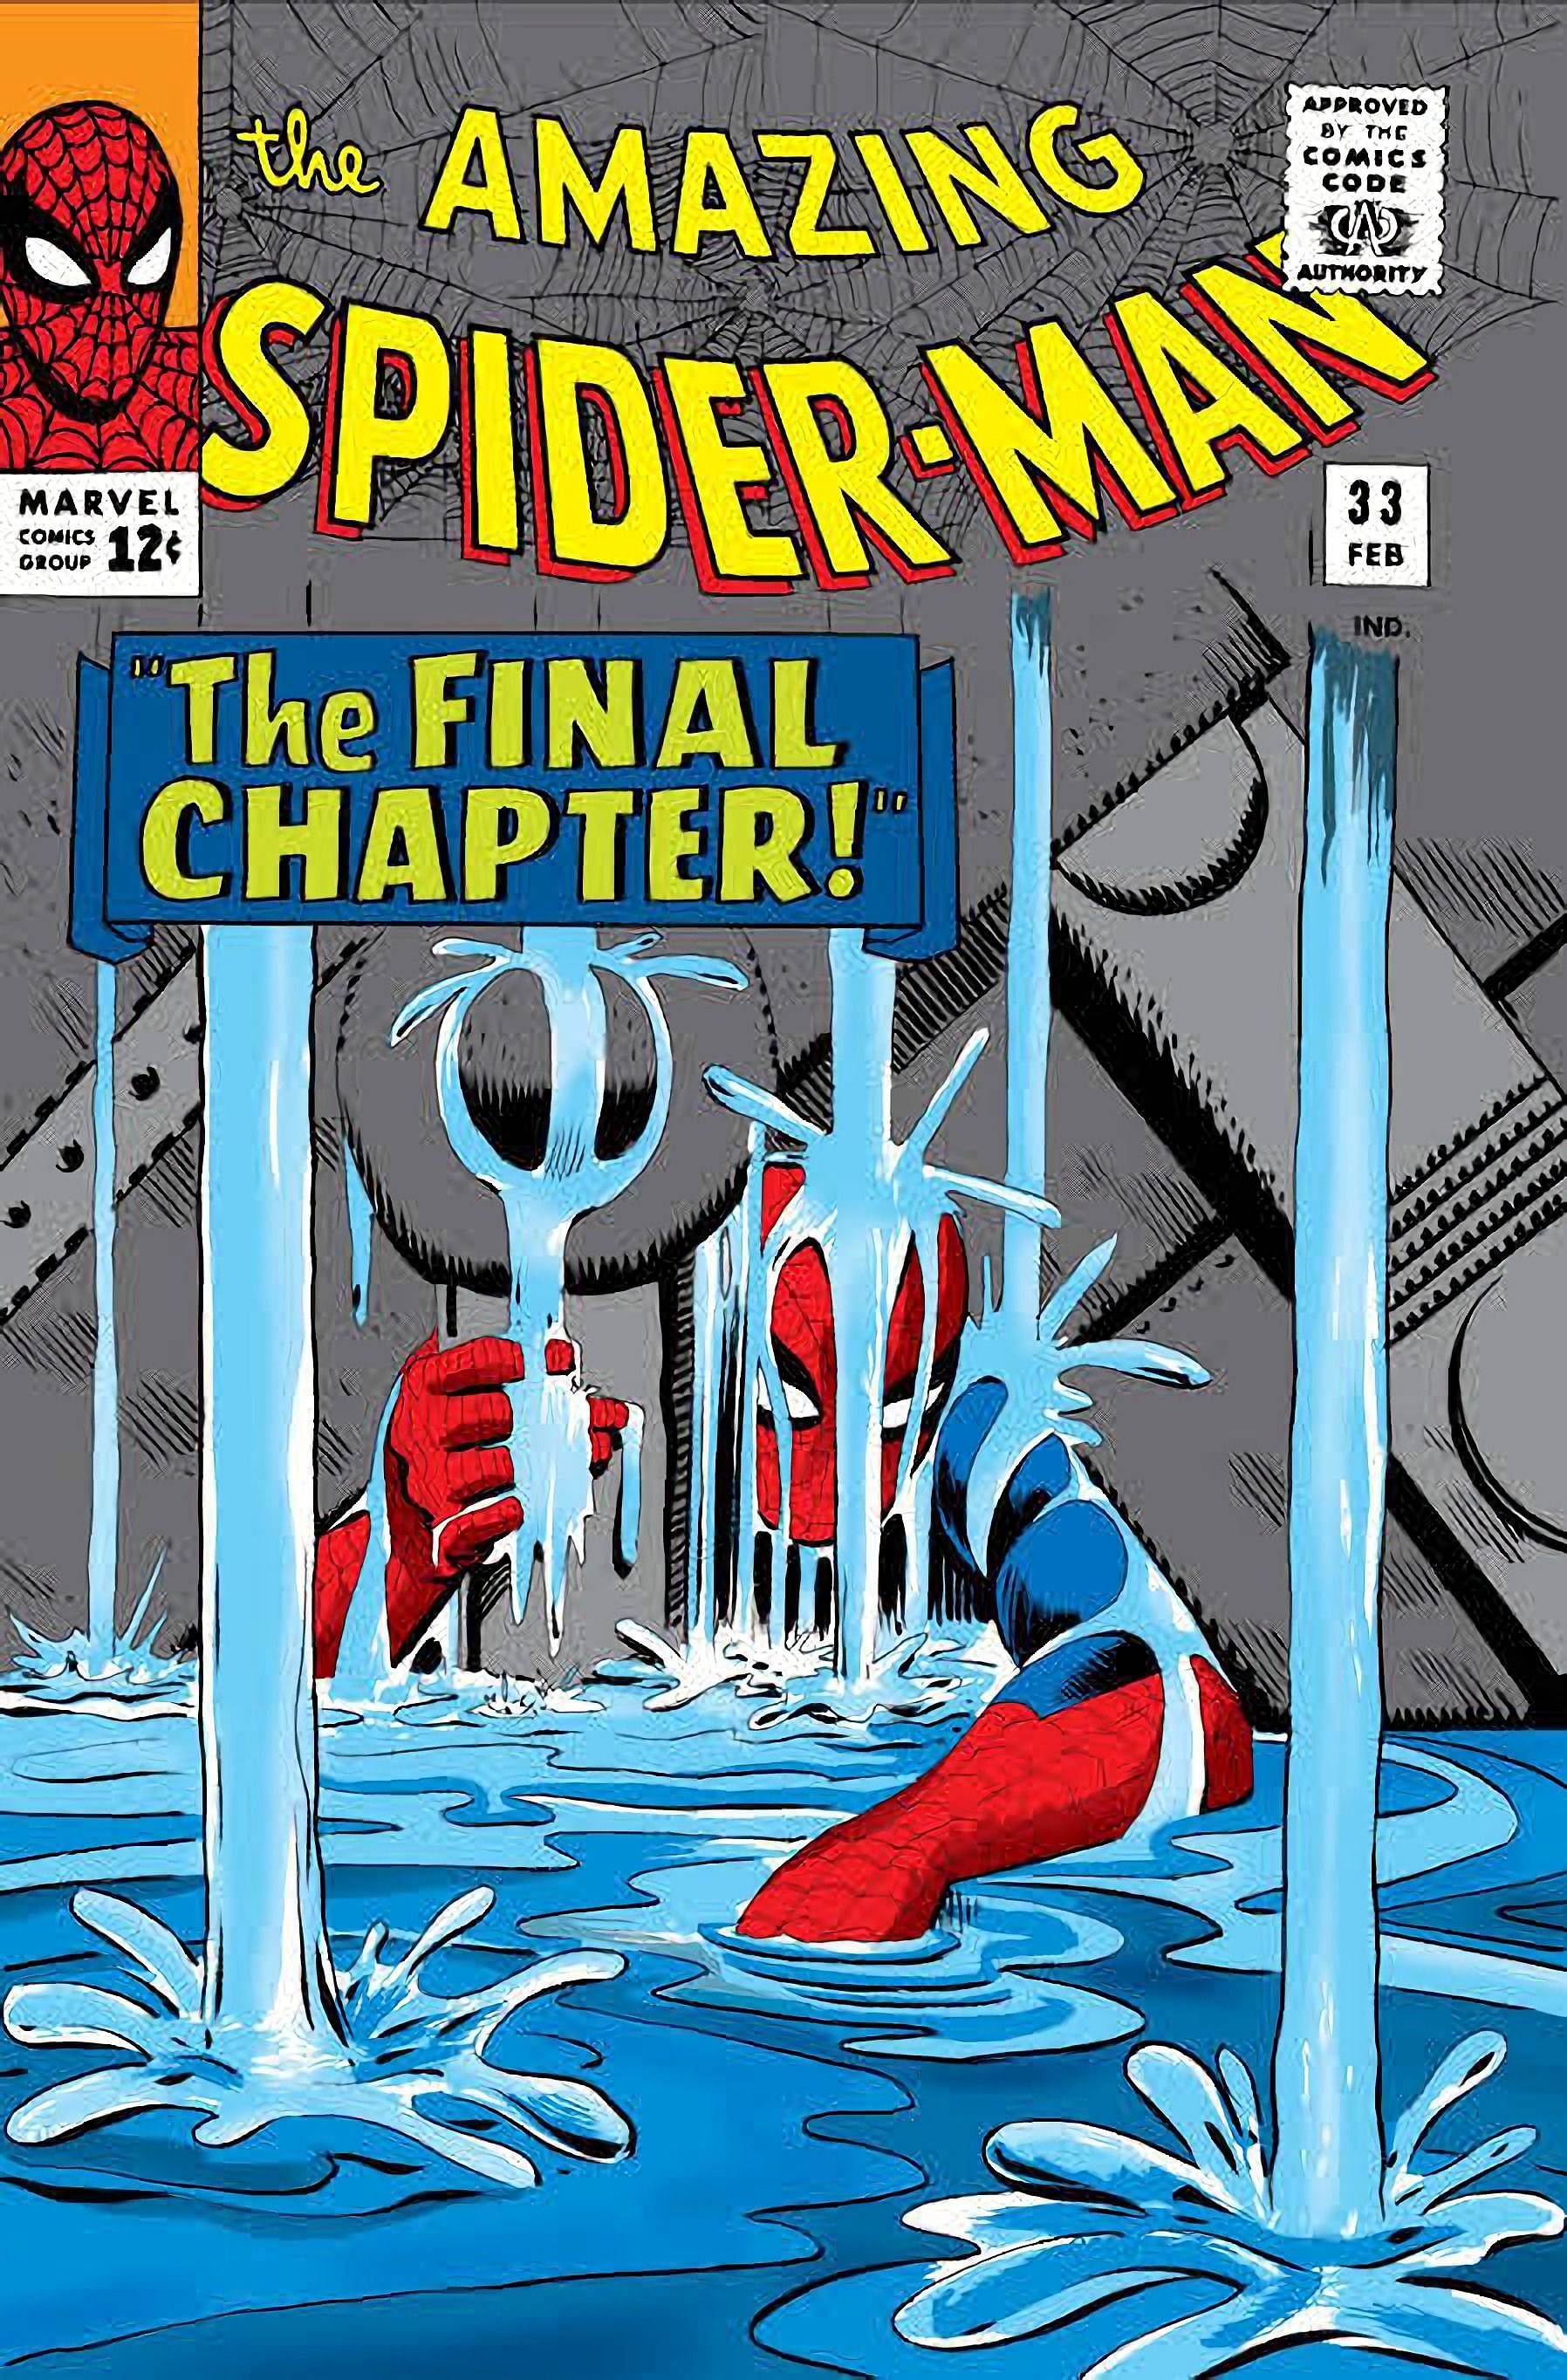 The Amazing Spider-Man comic&#039;s cover (Image via Marvel Comics)